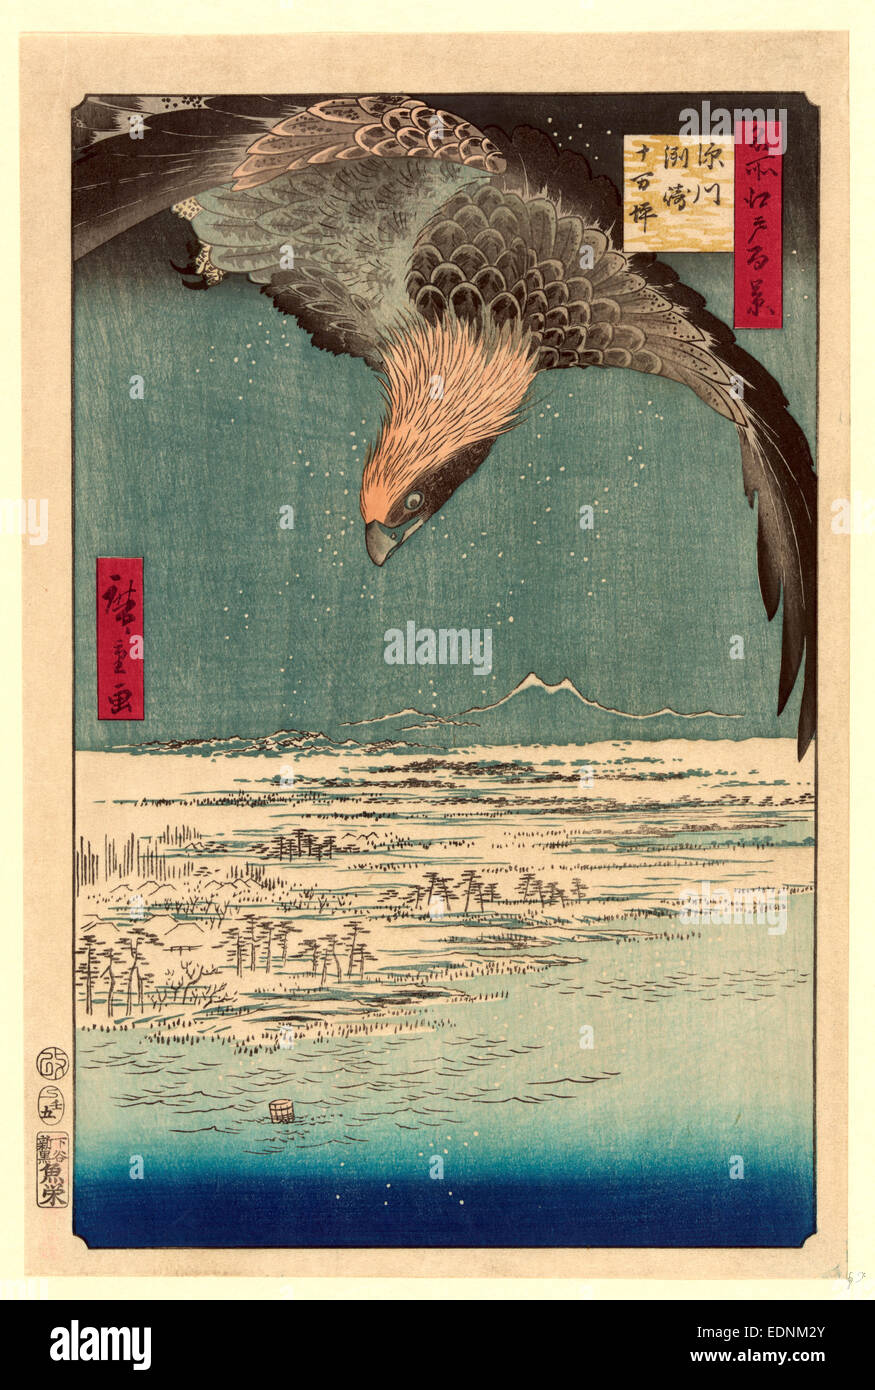 Fukagawa susaki jumantsubo, Ando, Hiroshige, 1797-1858, artist, [1857, printed later], 1 print : woodcut, color., Print shows a hawk flying above a snowy landscape along the coastline. Stock Photo